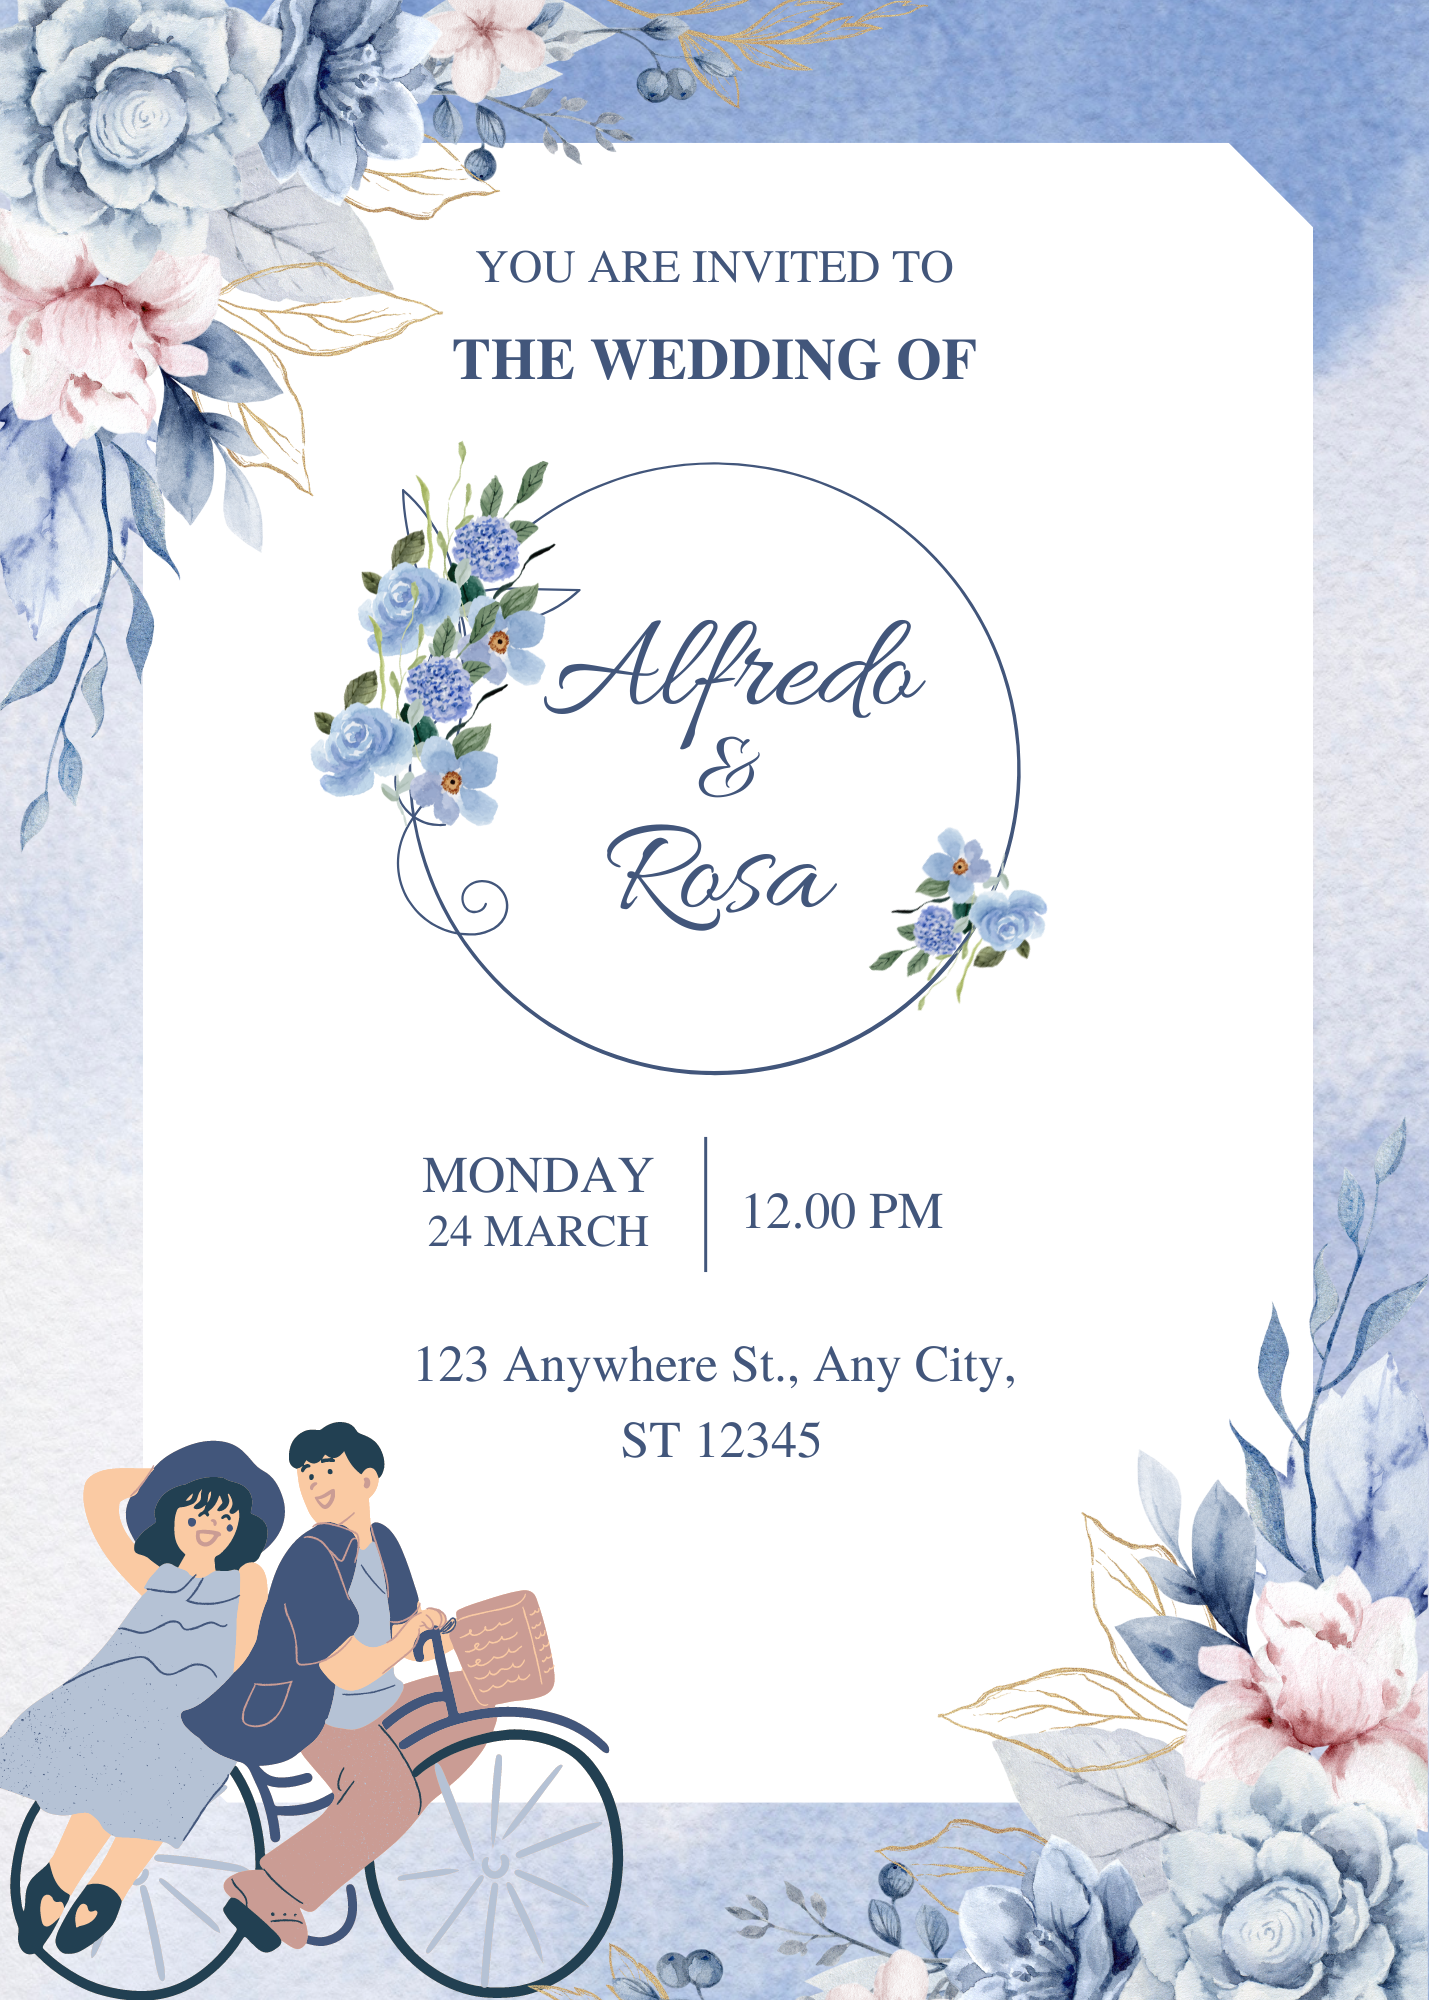 Soft Blue and White Floral Illustrative Wedding Invitation